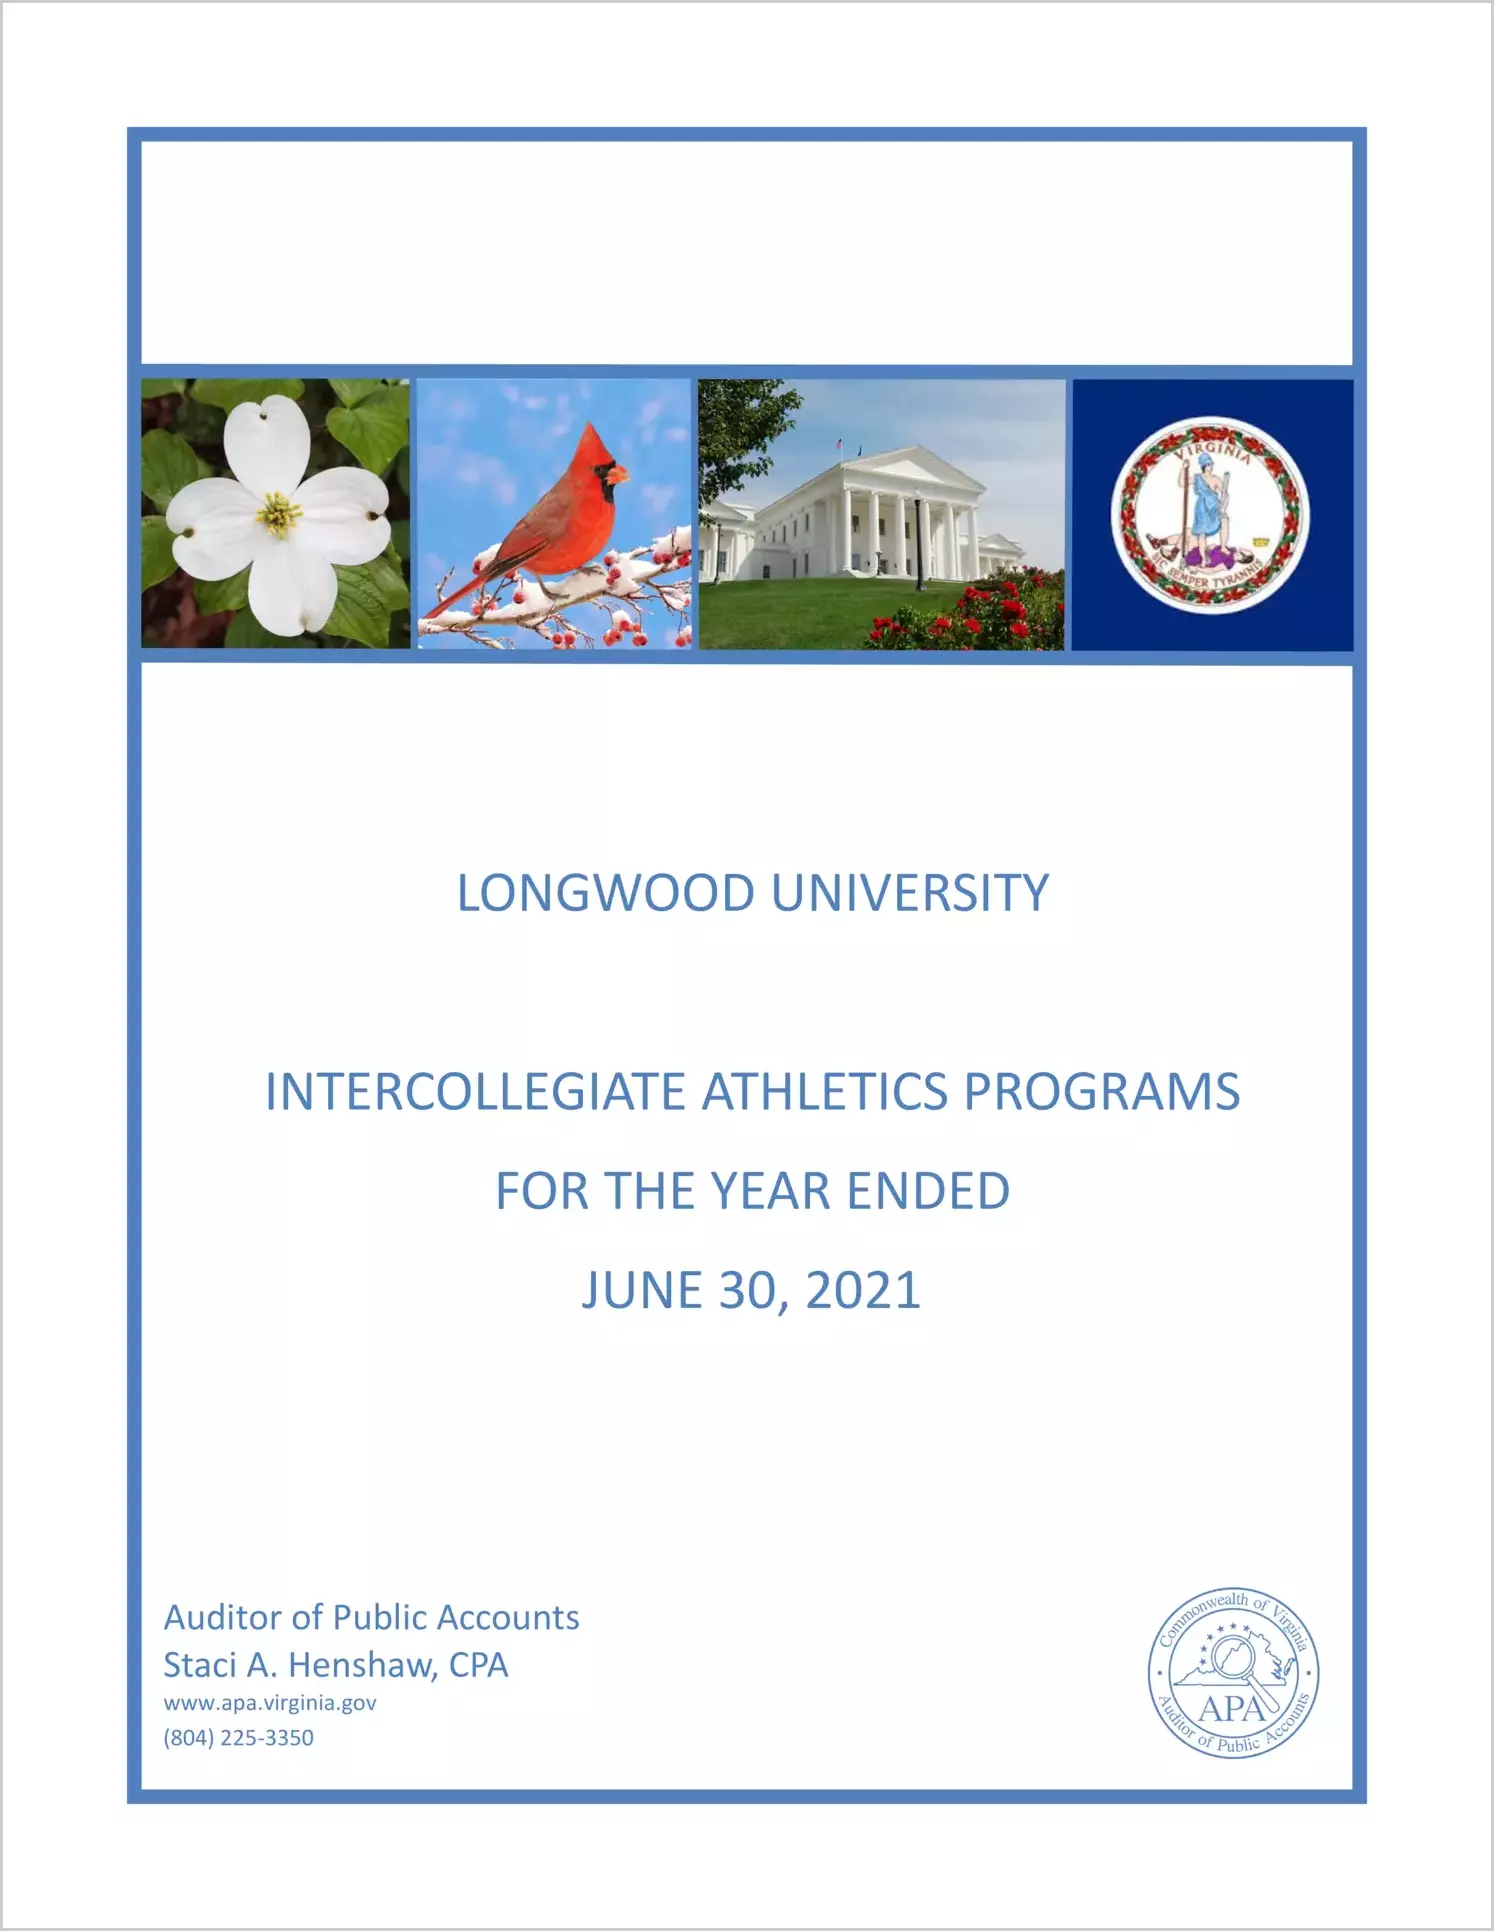 Longwood University Intercollegiate Athletics Programs for the year ended June 30, 2021